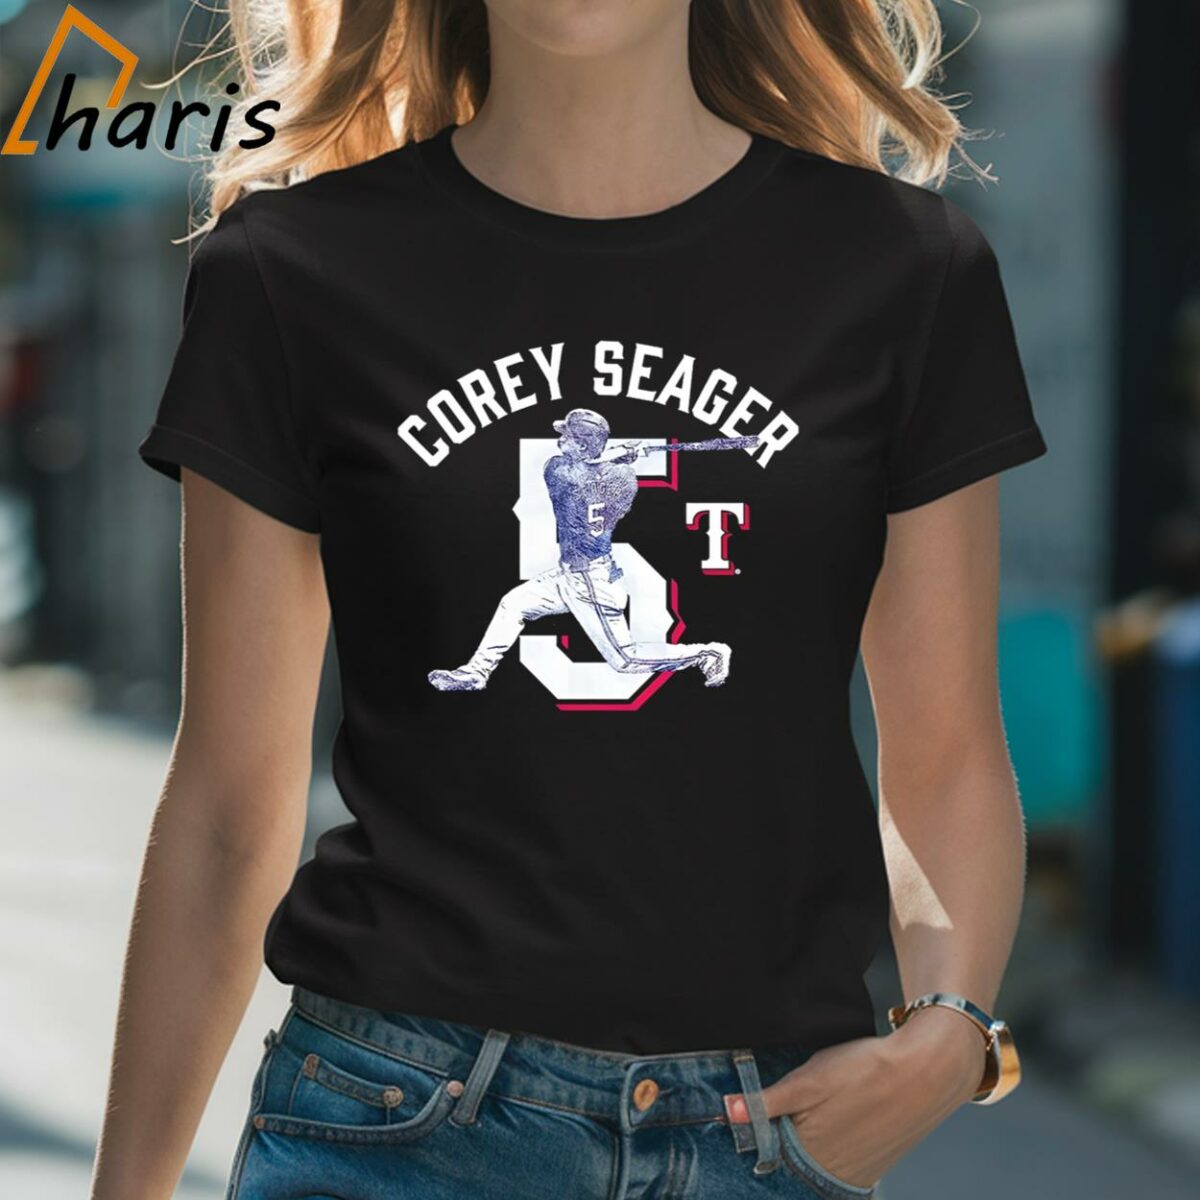 Corey Seager Texas Rangers Player Swing Shirt 2 Shirt